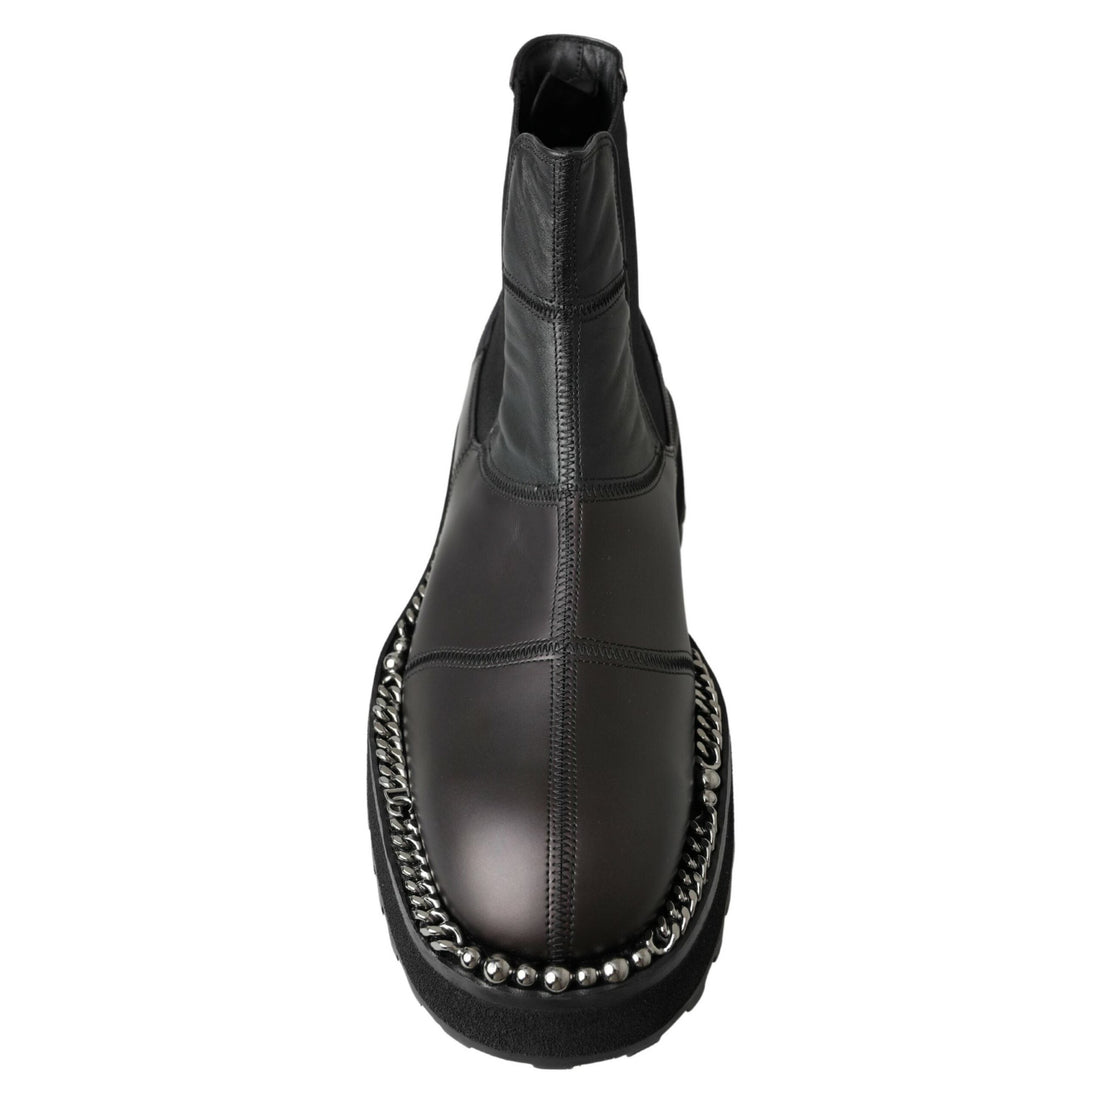 Dolce & Gabbana Black Leather Slip on Stretch Boots